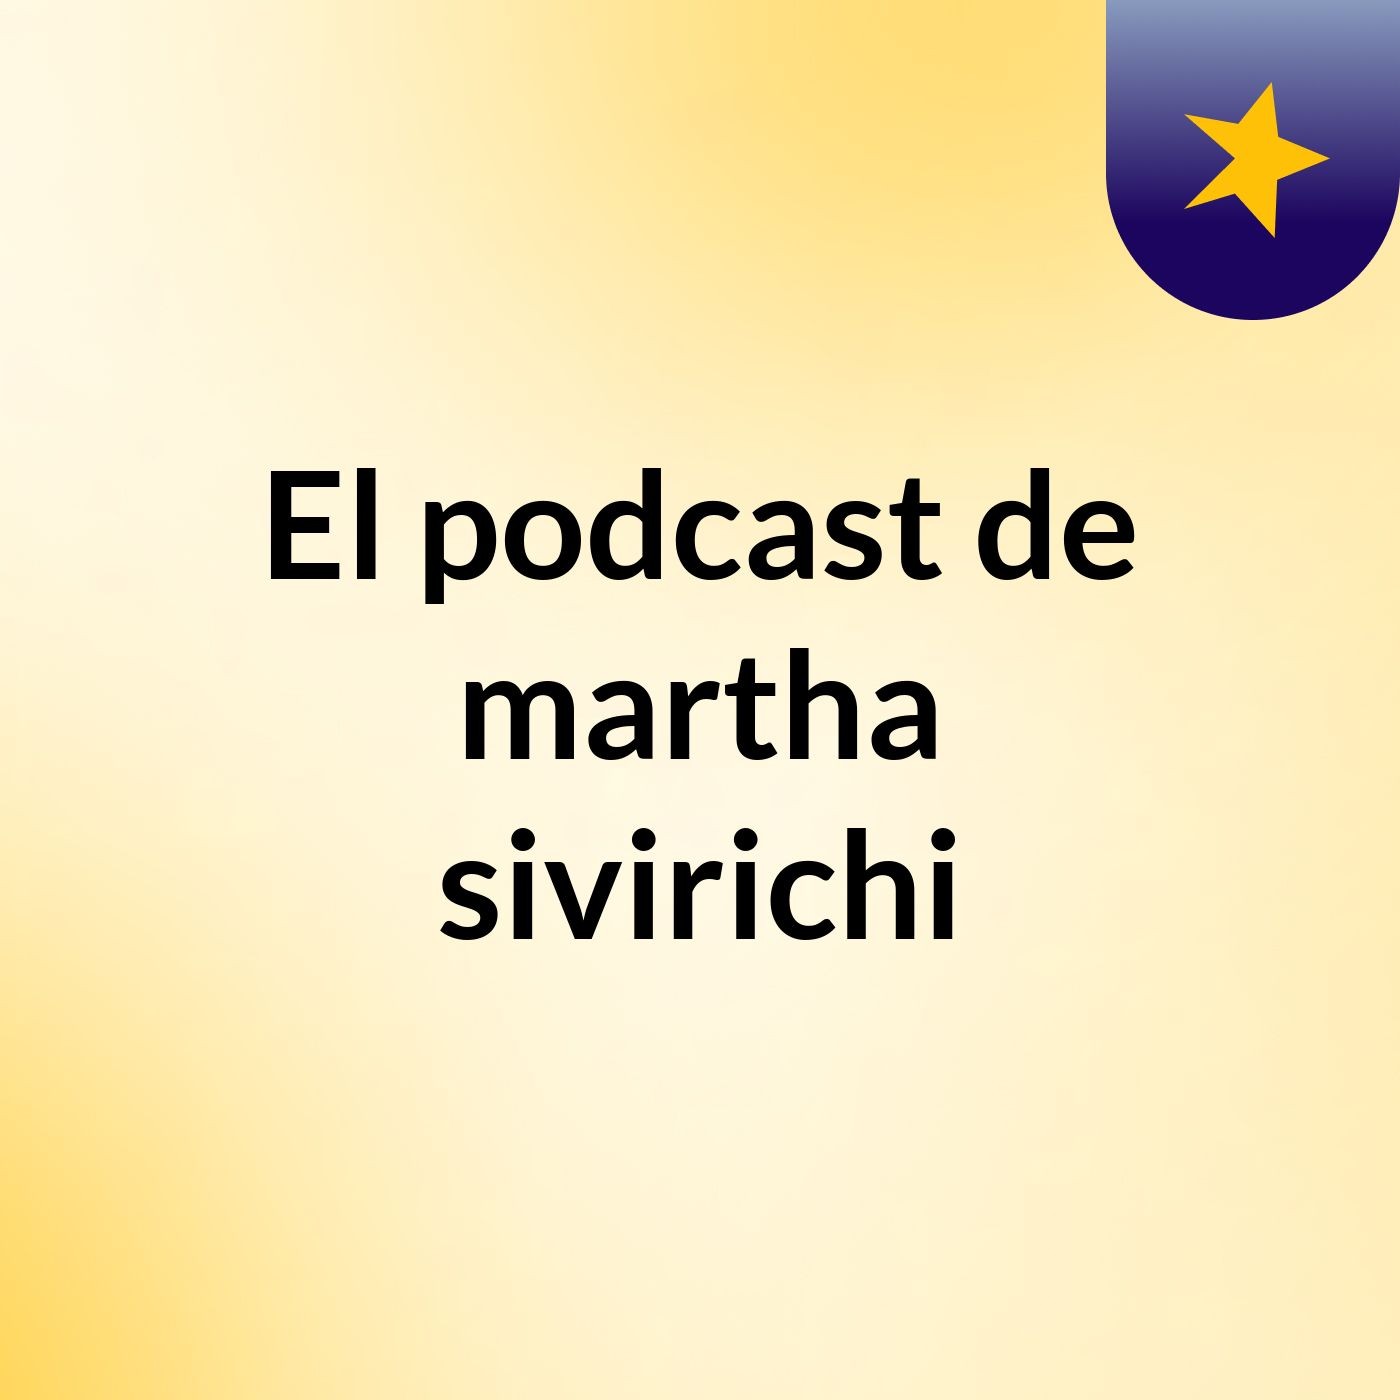 Episodio 5 - El podcast de martha sivirichi